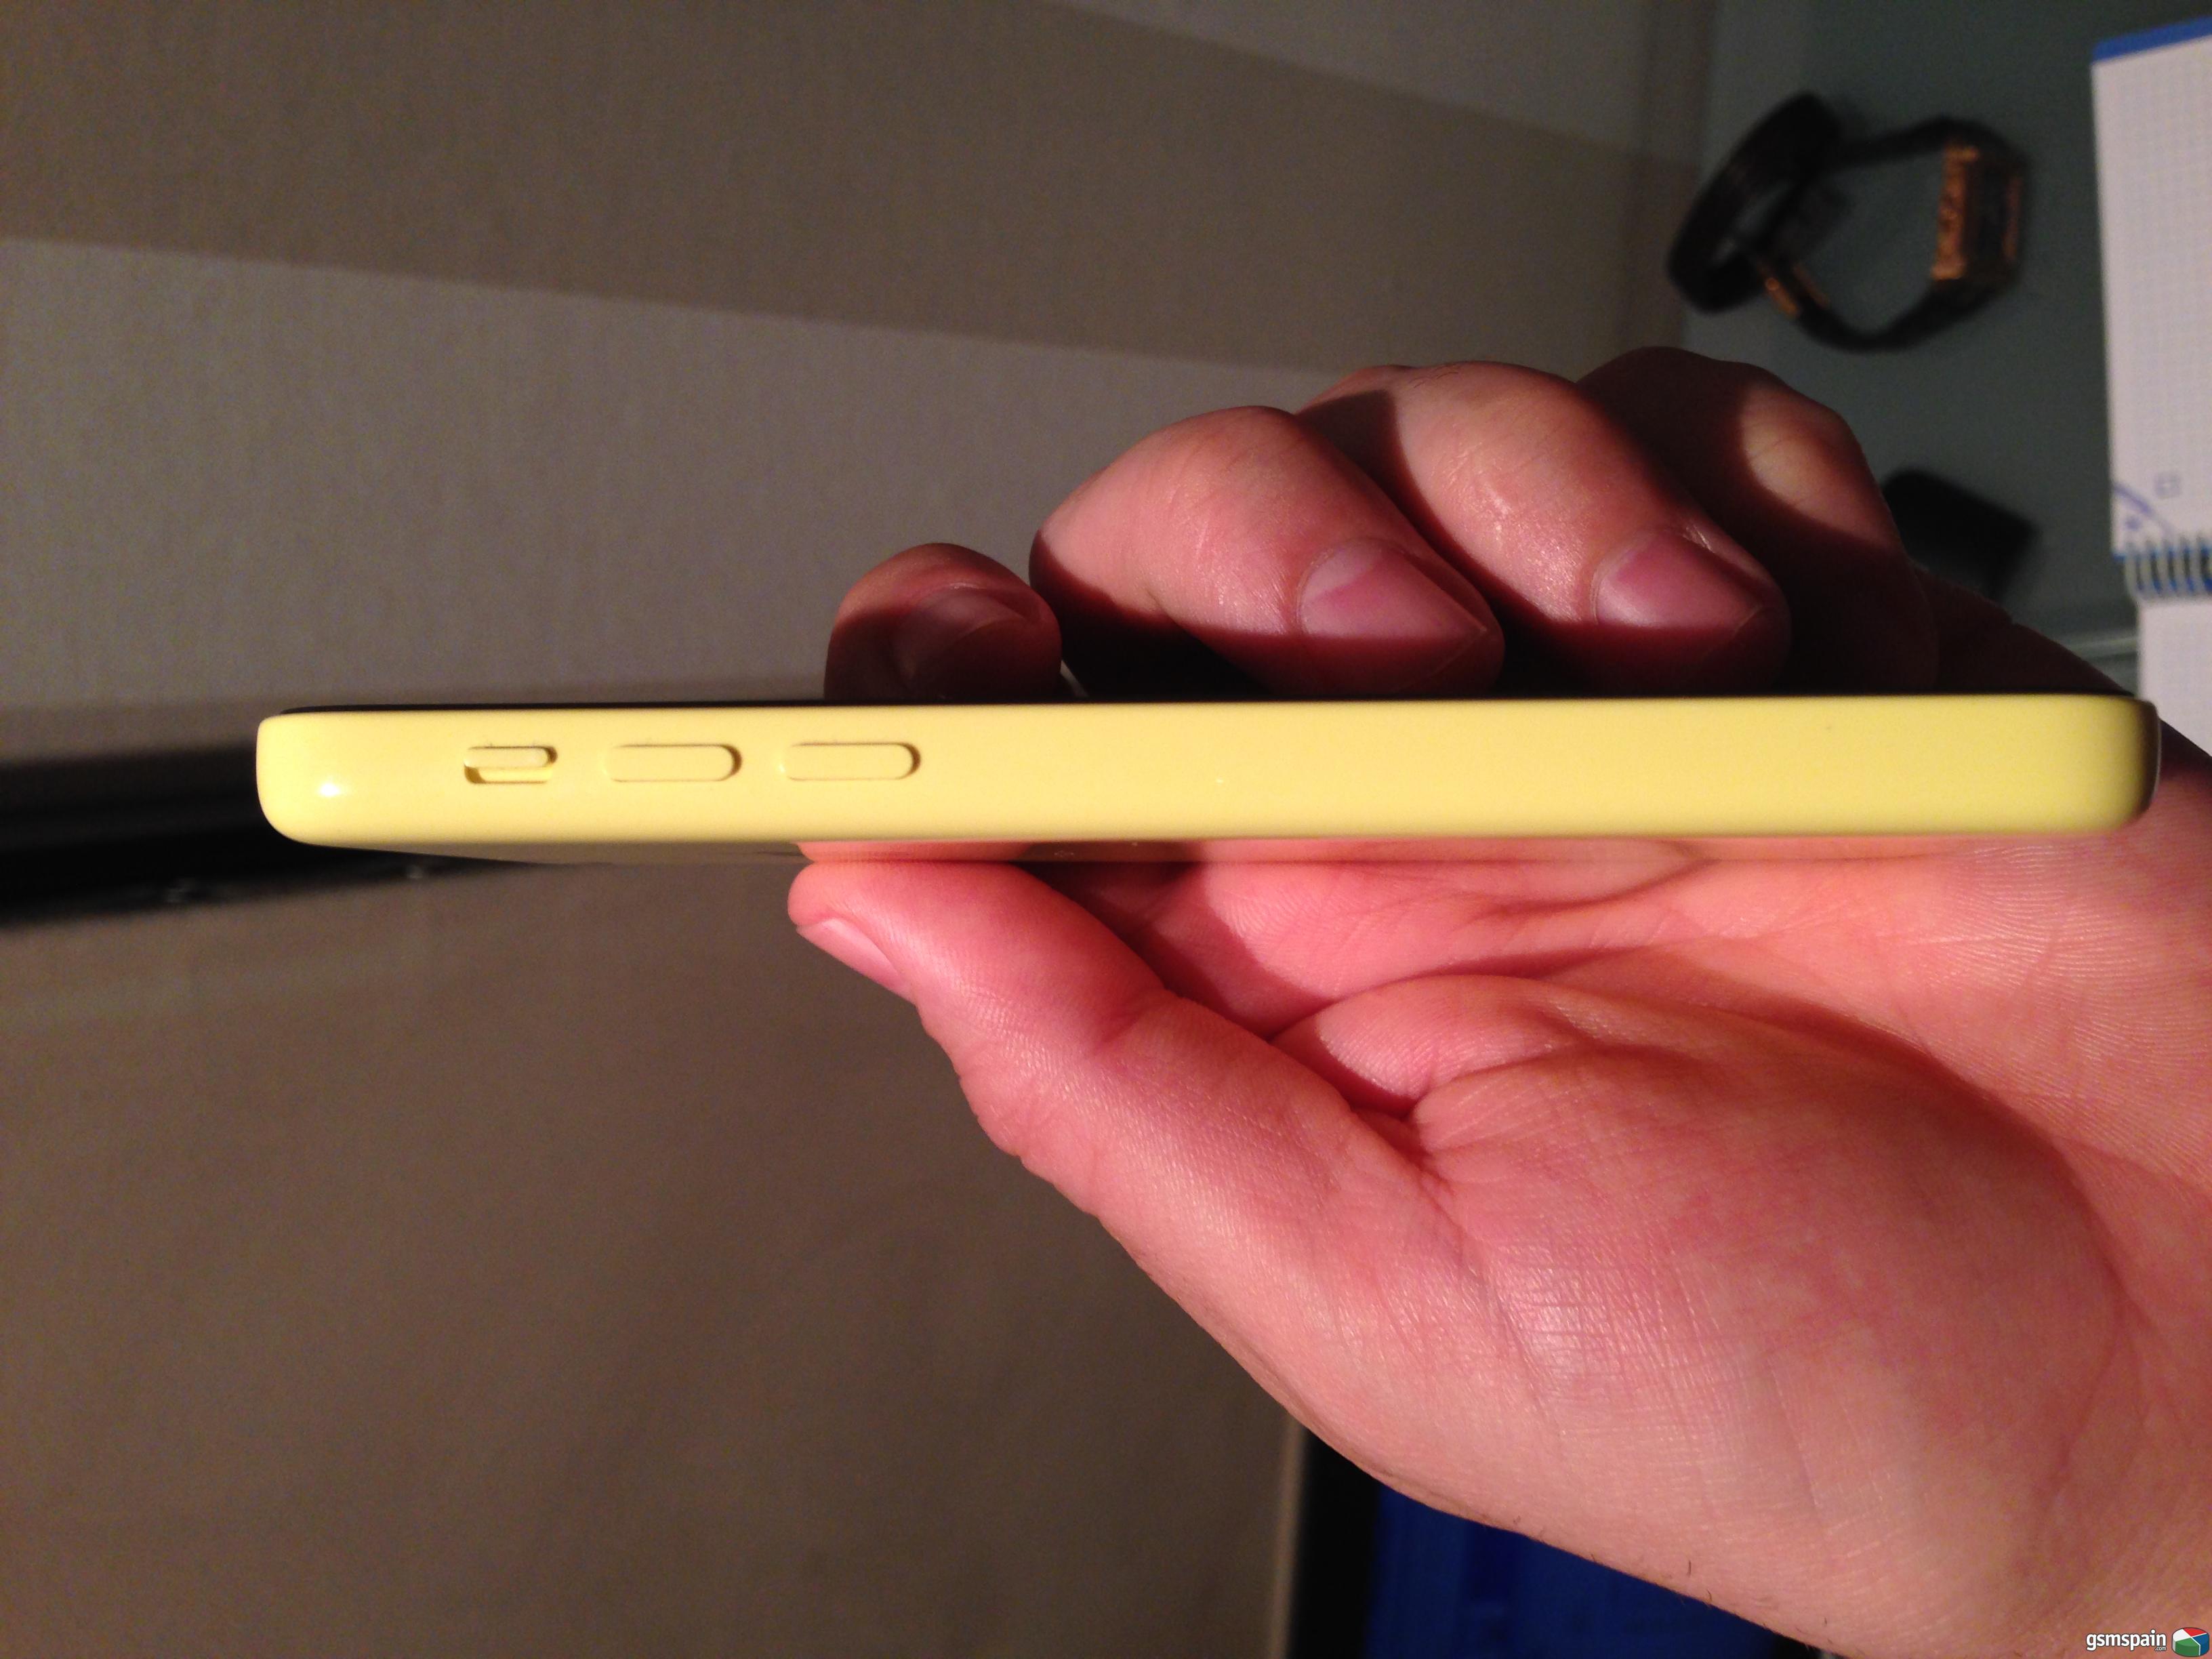 [VENDO] iPhone 5c Amarillo, libre